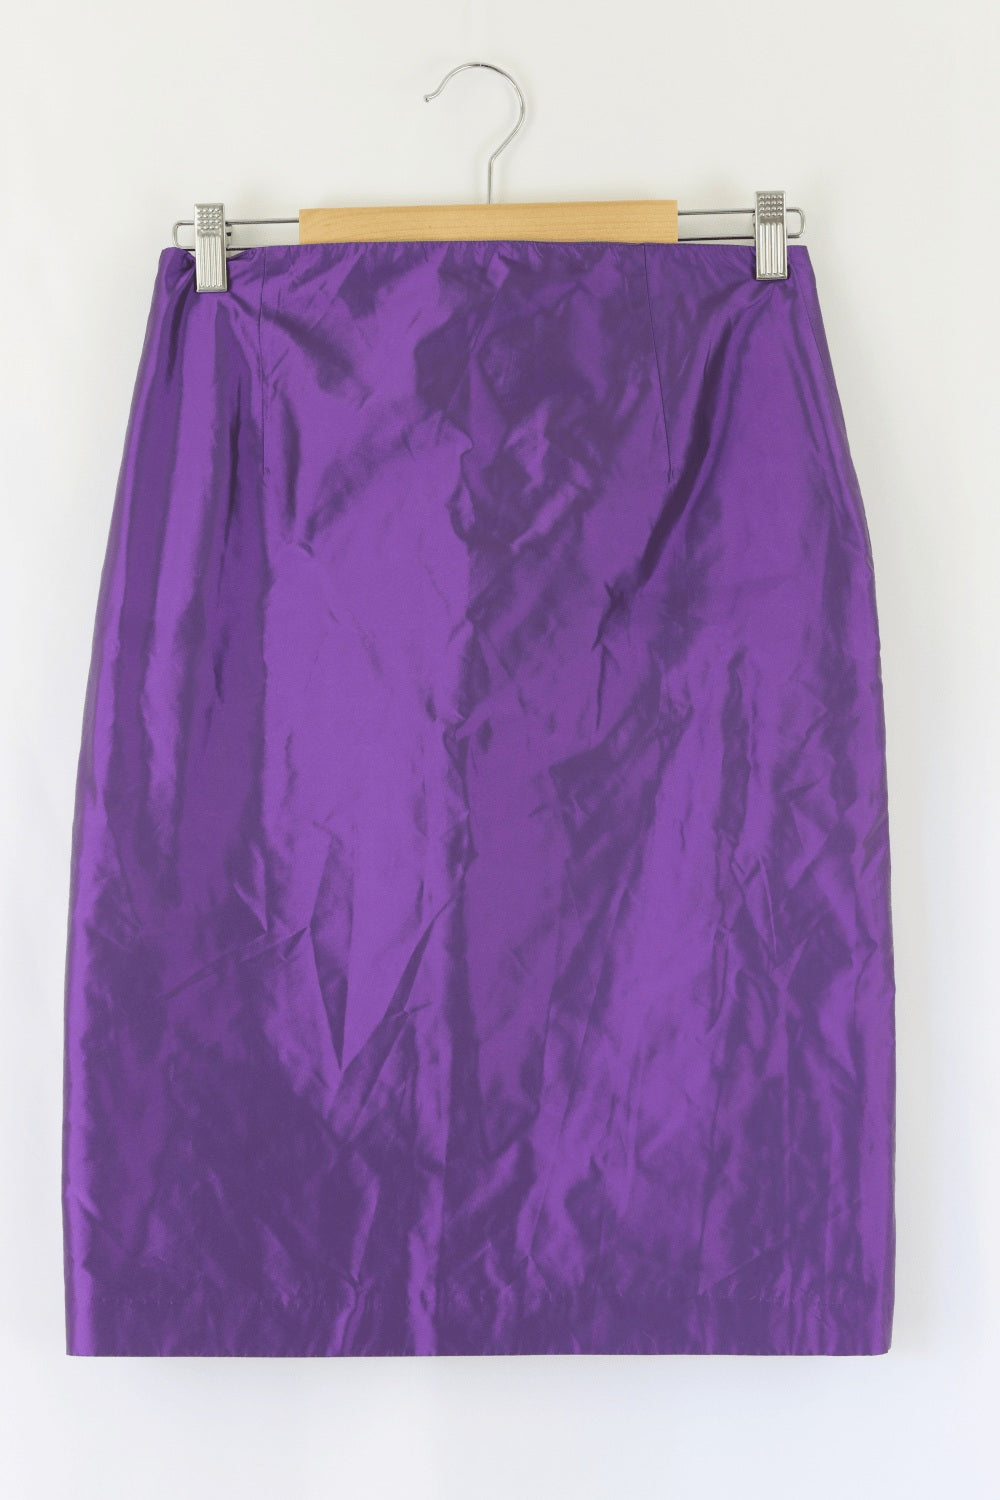 Carla Zampati Purple Skirt 8